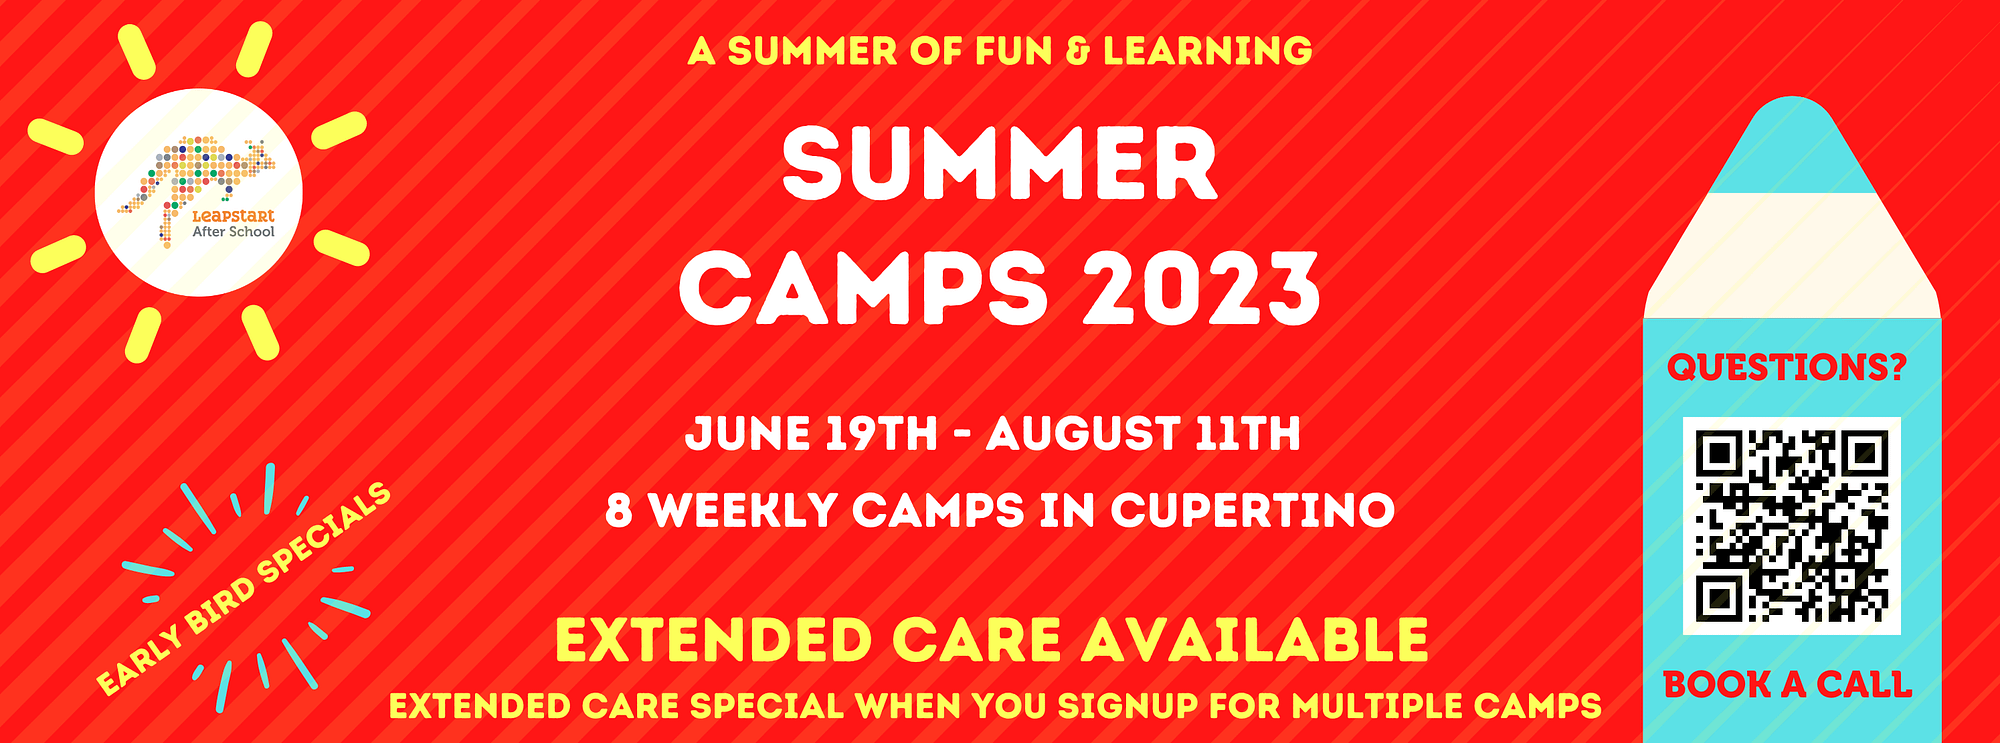 SUMMER CAMPS 2023